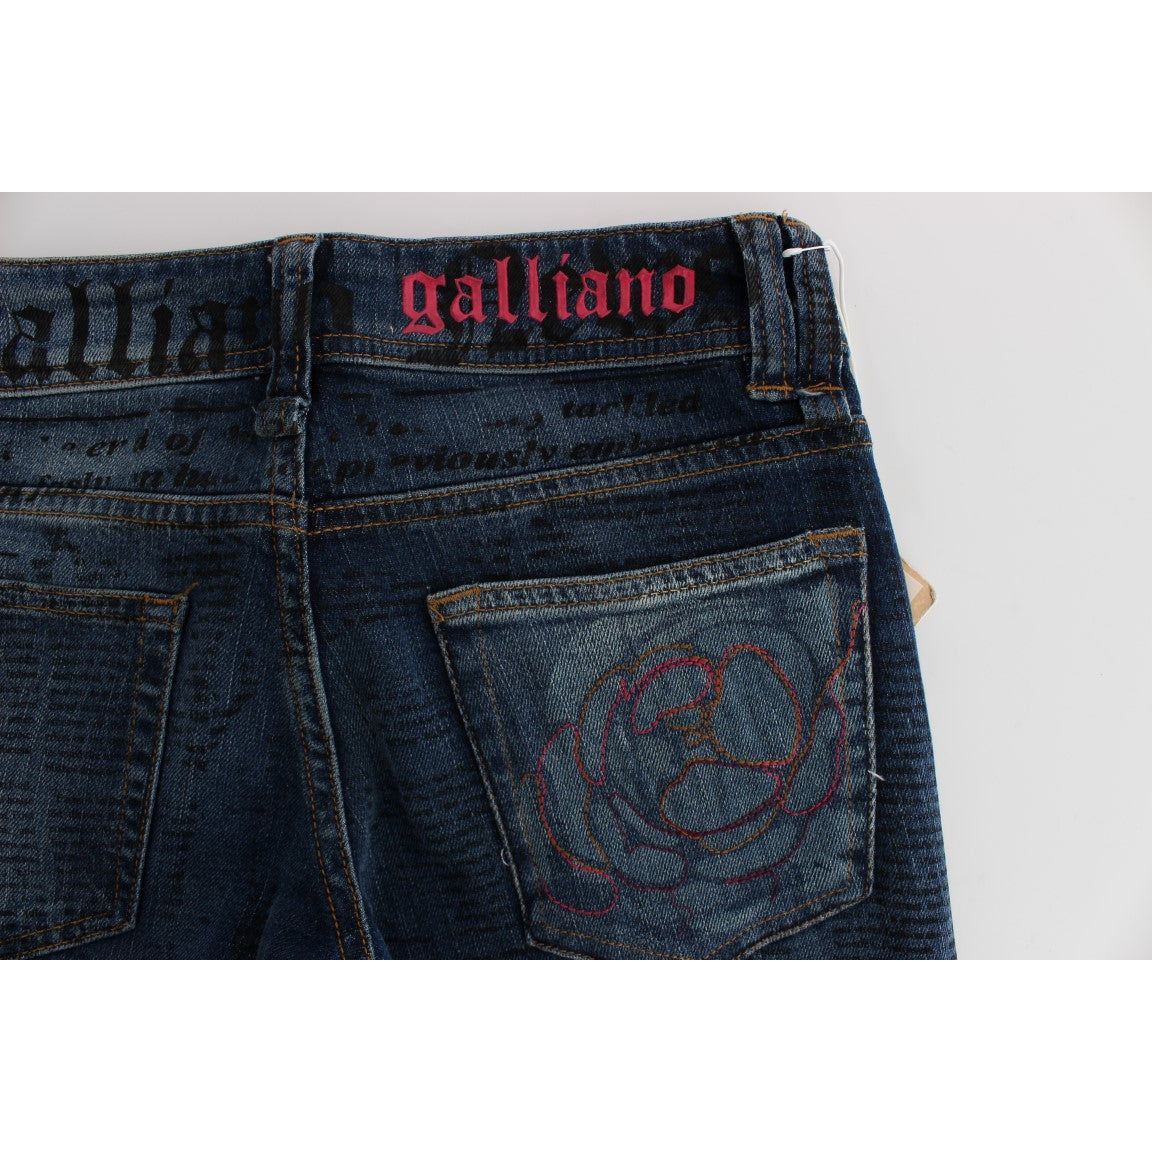 John Galliano Elegant Slim Bootcut Denim Jeans blue-wash-cotton-blend-slim-fit-bootcut-jeans-1 329940-blue-wash-cotton-blend-slim-fit-bootcut-jeans-3-7.jpg